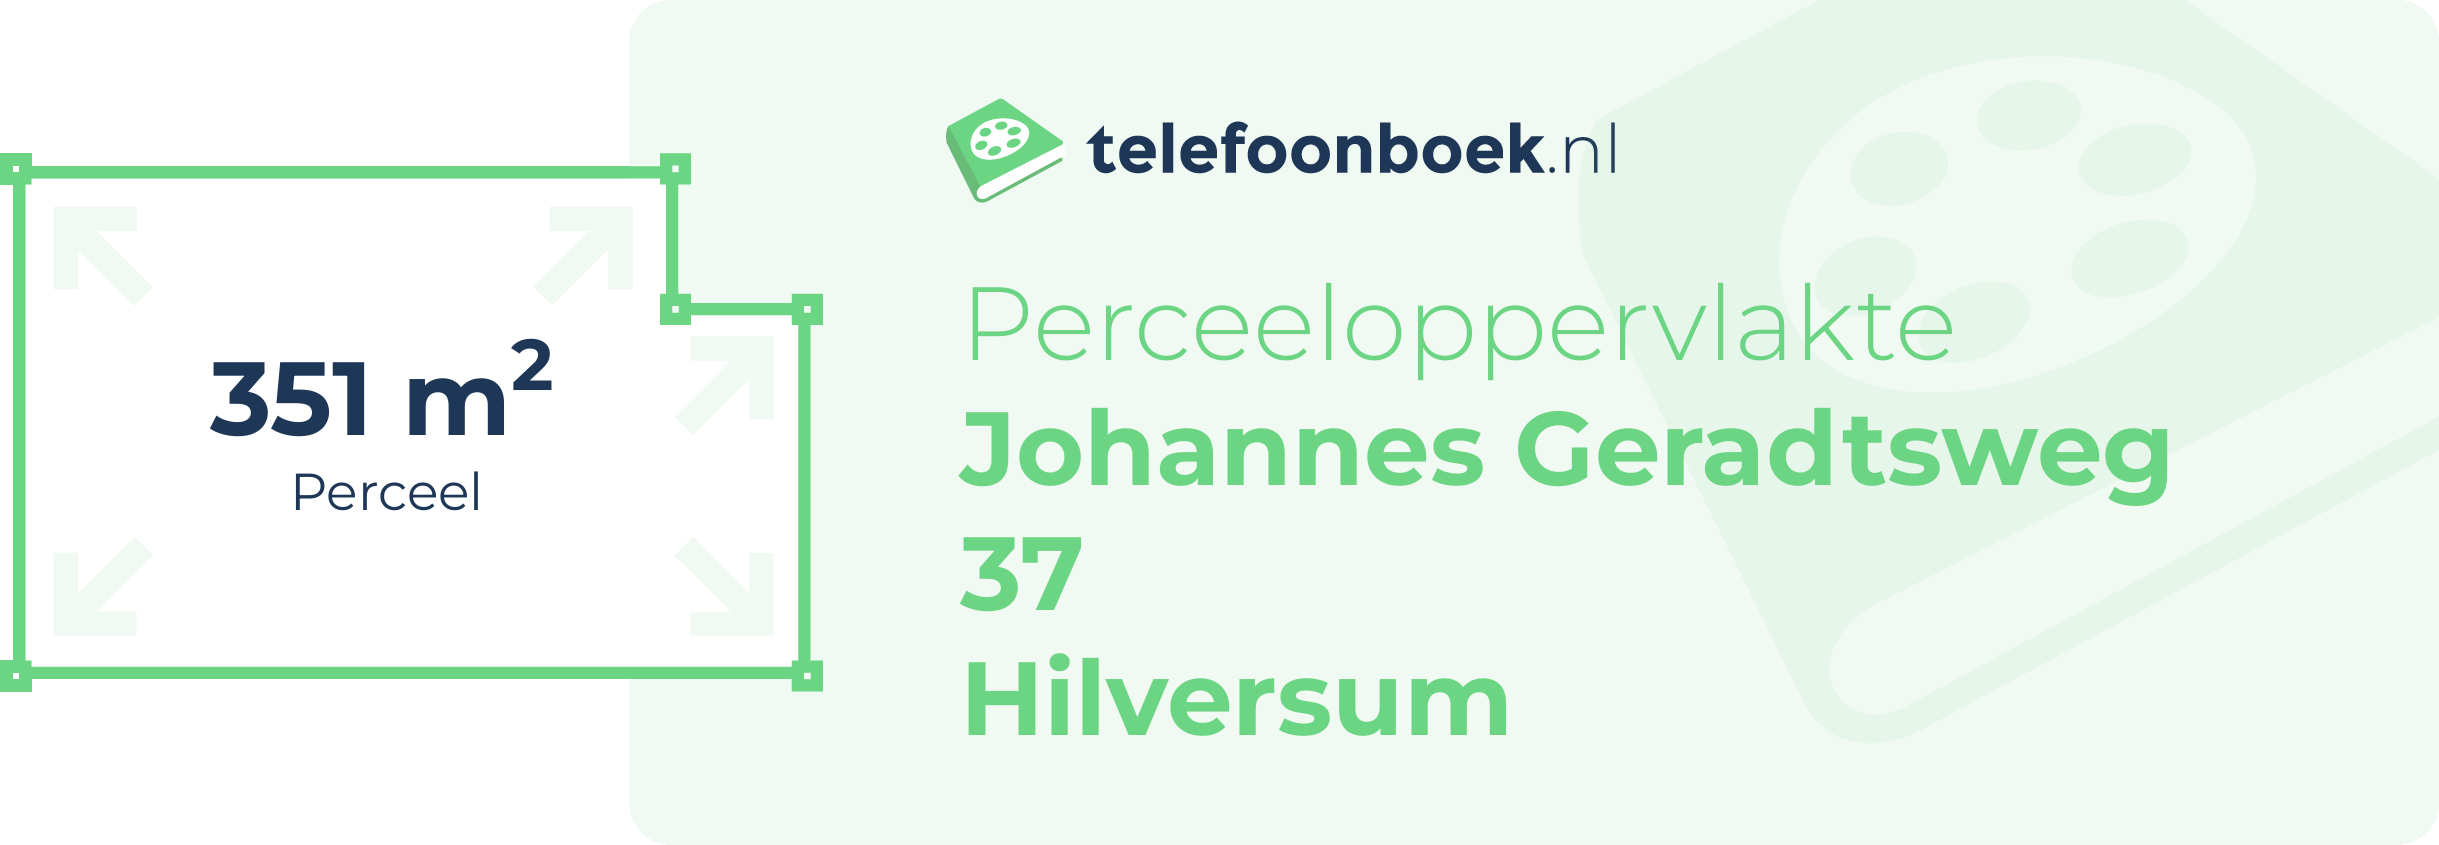 Perceeloppervlakte Johannes Geradtsweg 37 Hilversum